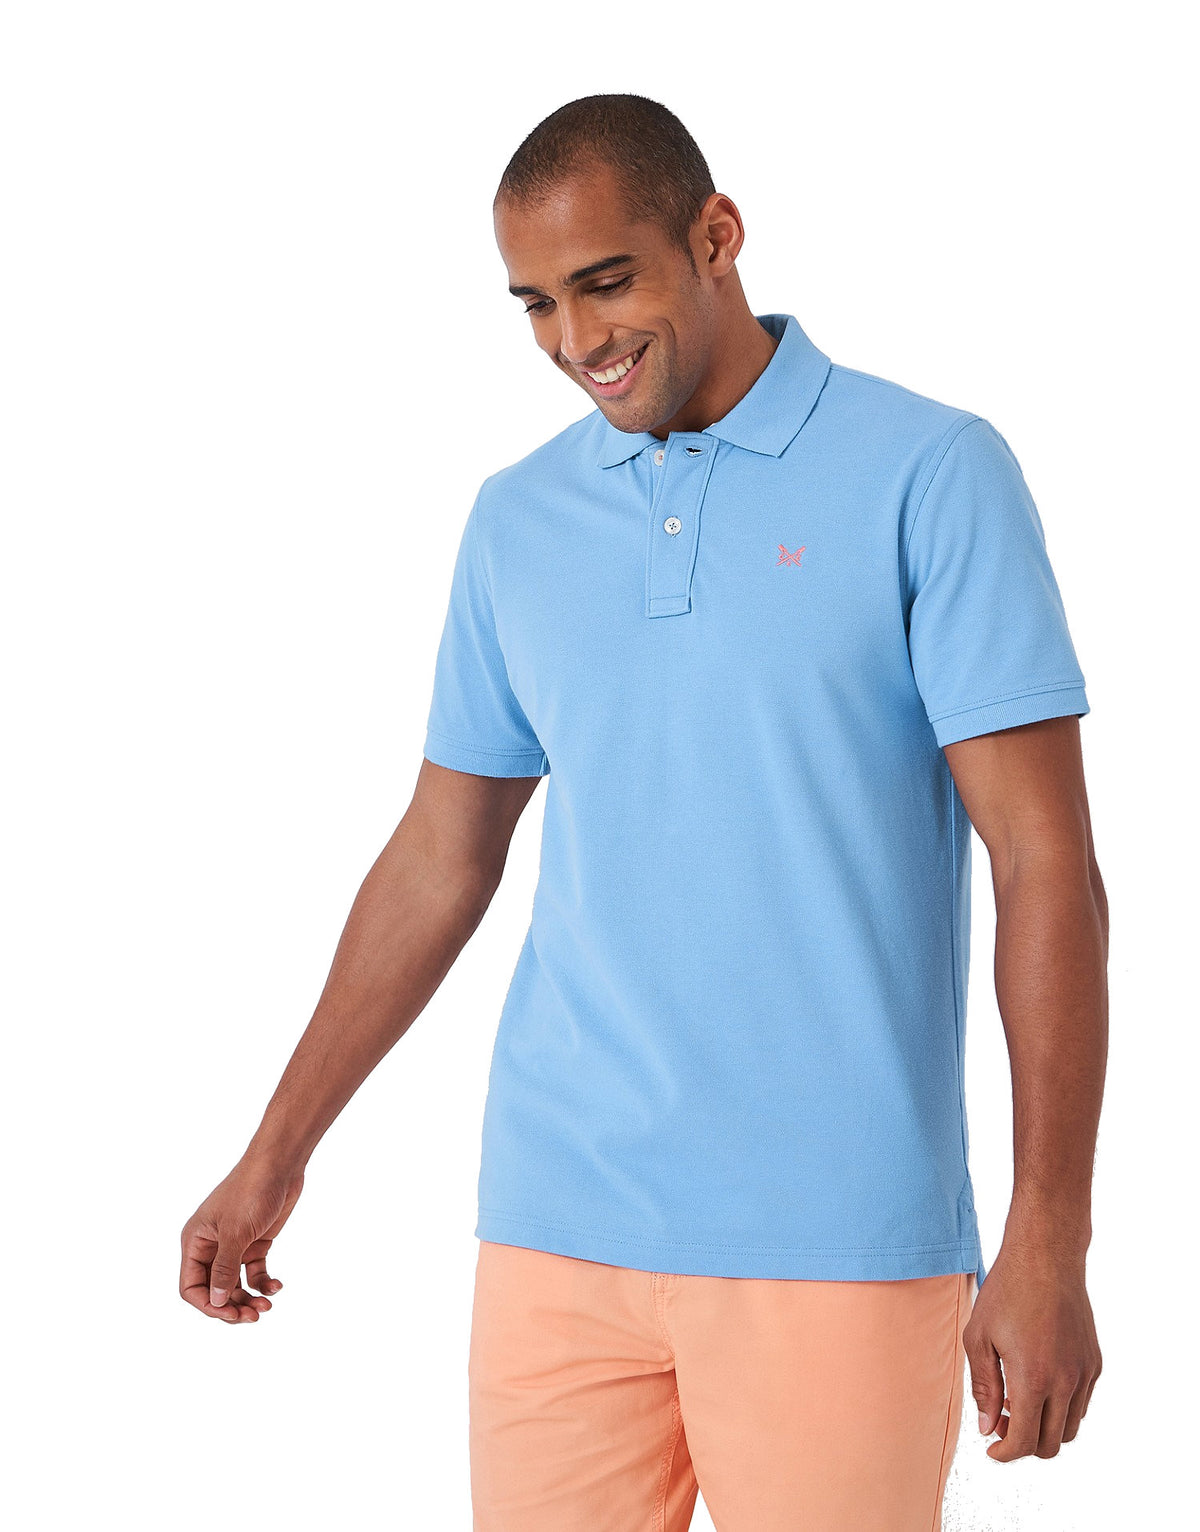 Crew Clothing Mens Pique Polo Shirt 'Classic Pique Polo' - Short Sleeved, 01, Mke002, Cornflower Blue